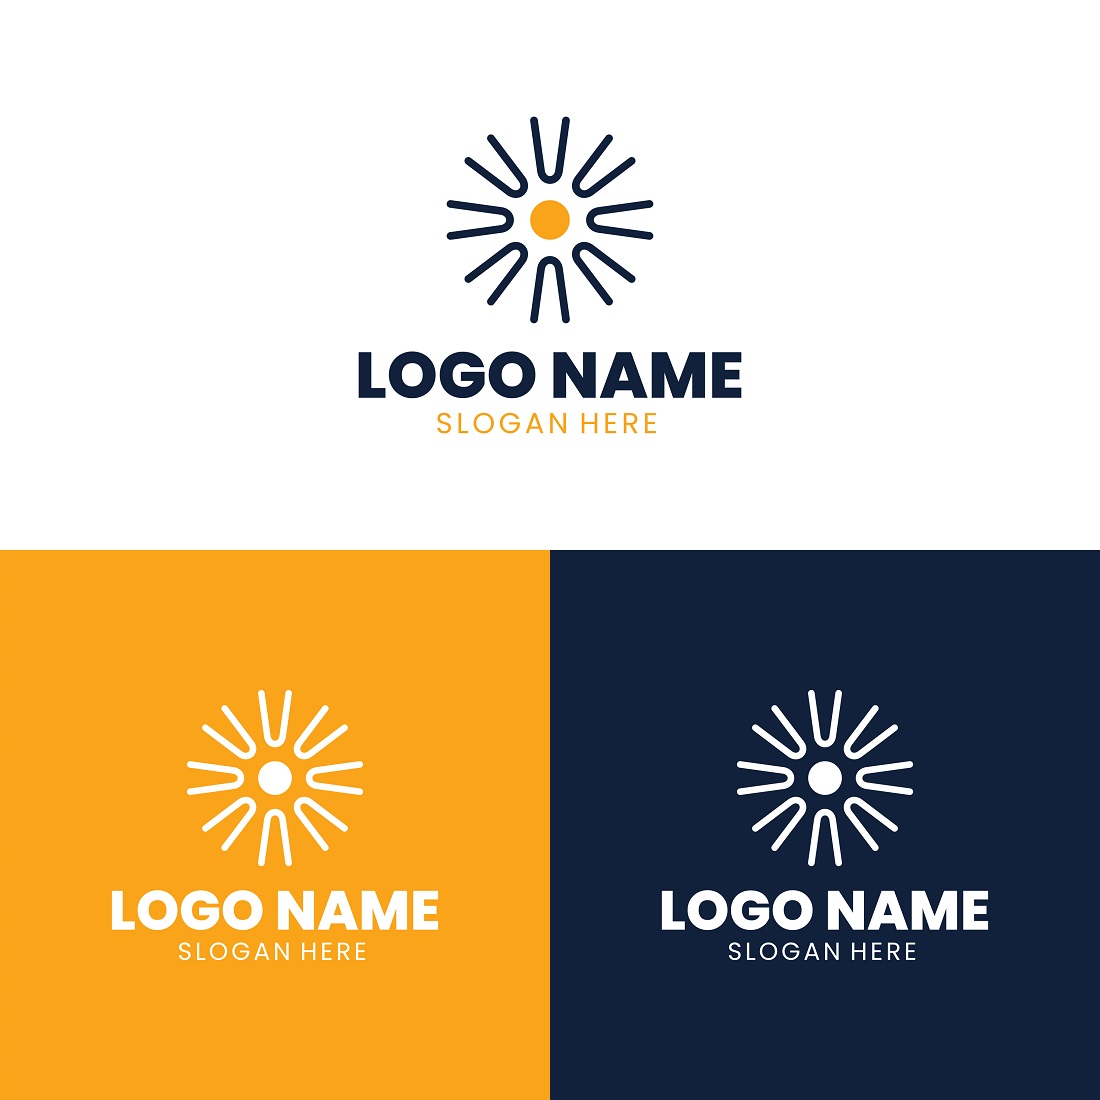 Flat sun logo design cover image.